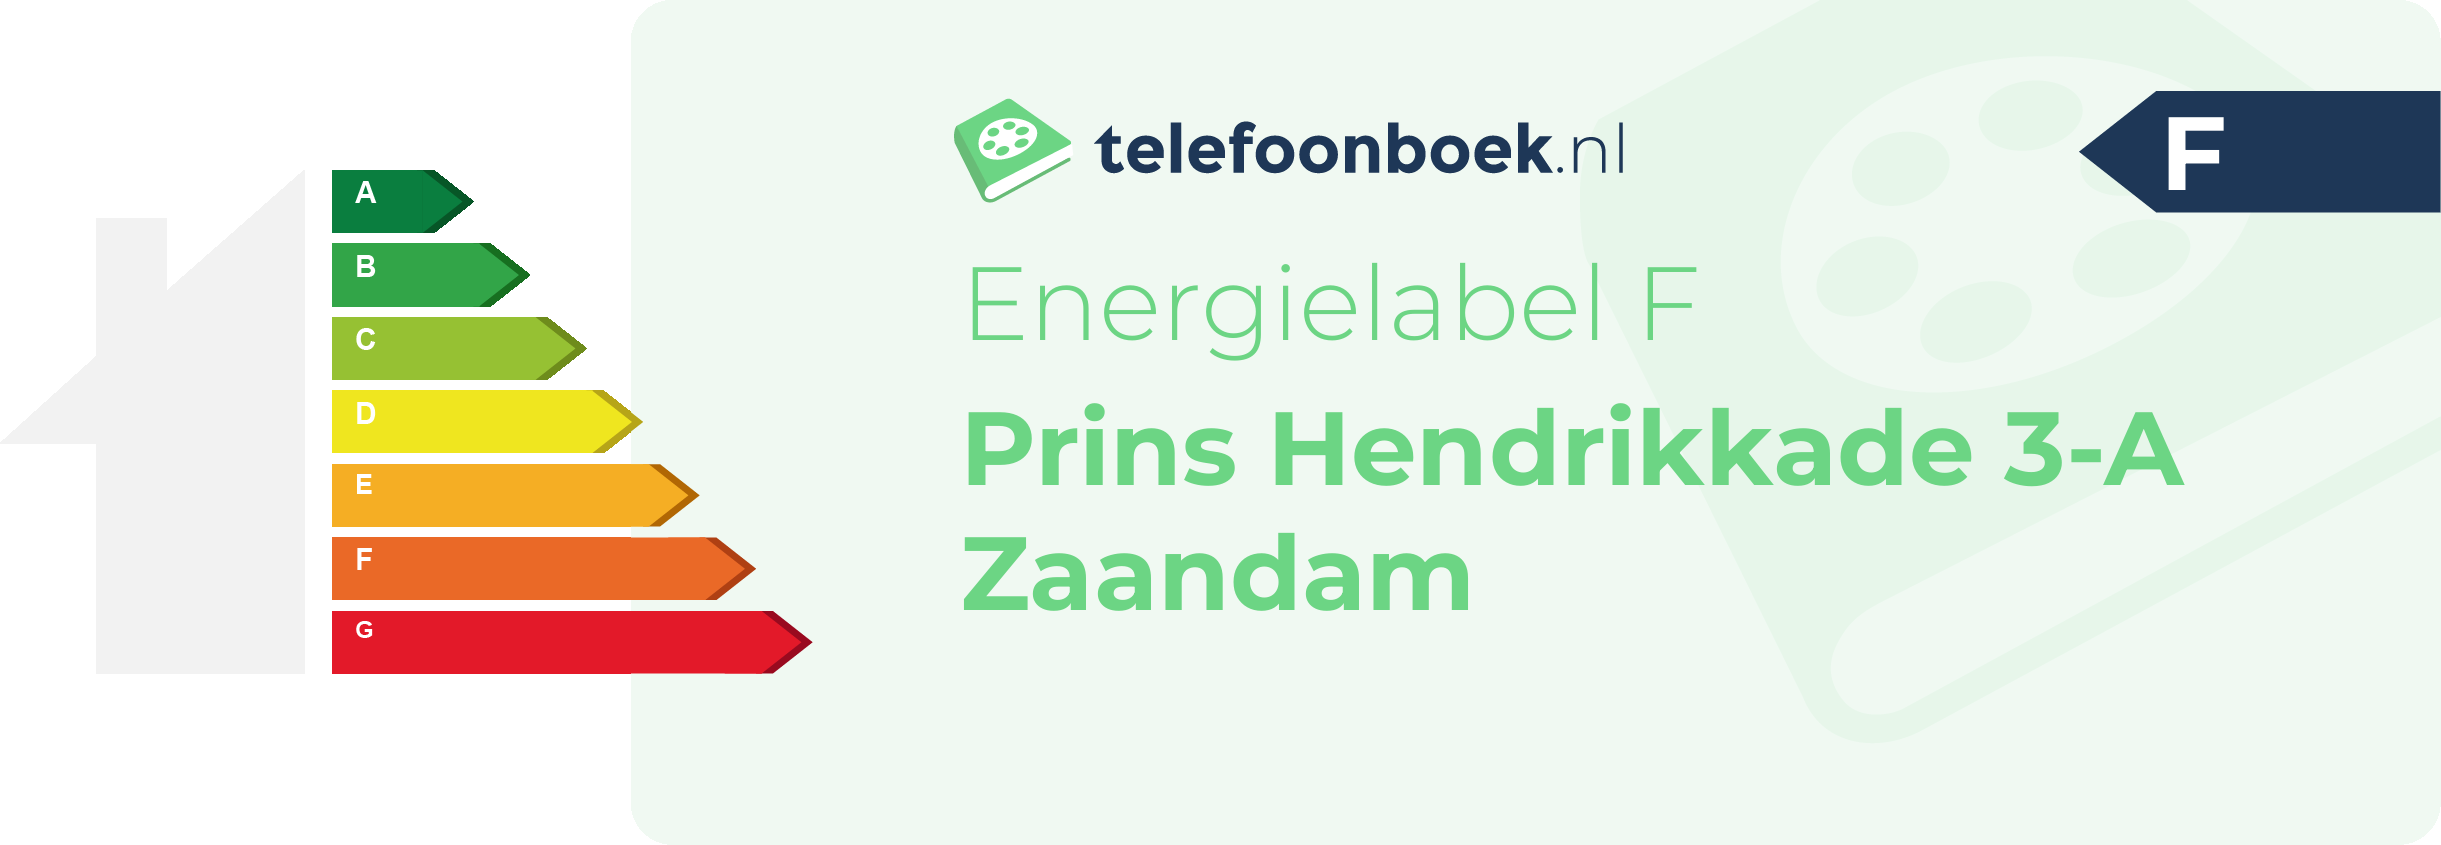 Energielabel Prins Hendrikkade 3-A Zaandam